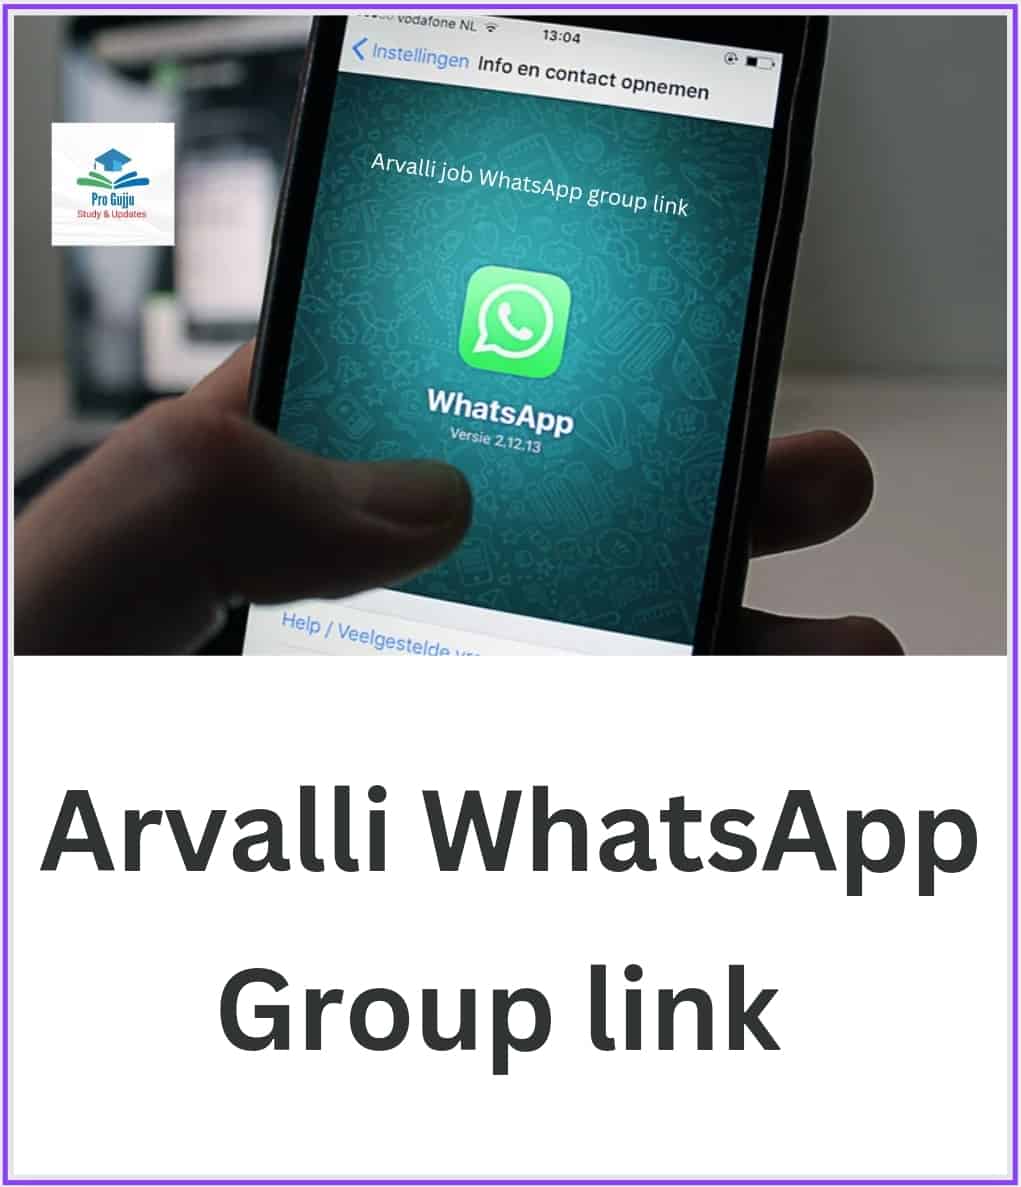 Arvalli WhatsApp Group Link